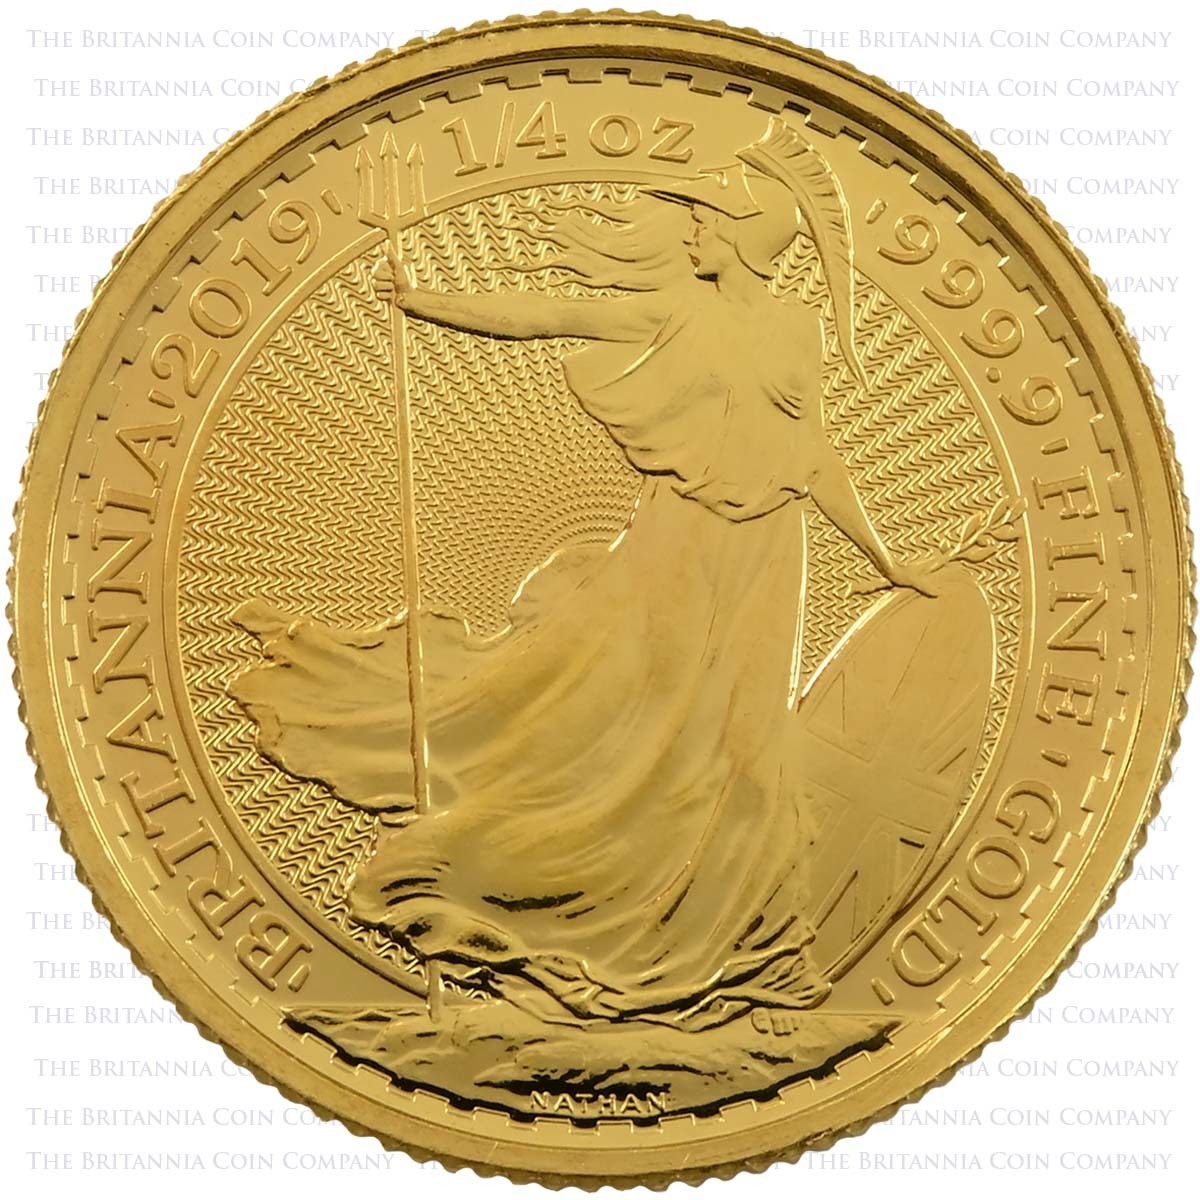 Quarter Ounce 24 Carat Gold Mixed-Date Britannia Bullion Coins (Best Value) Reverse